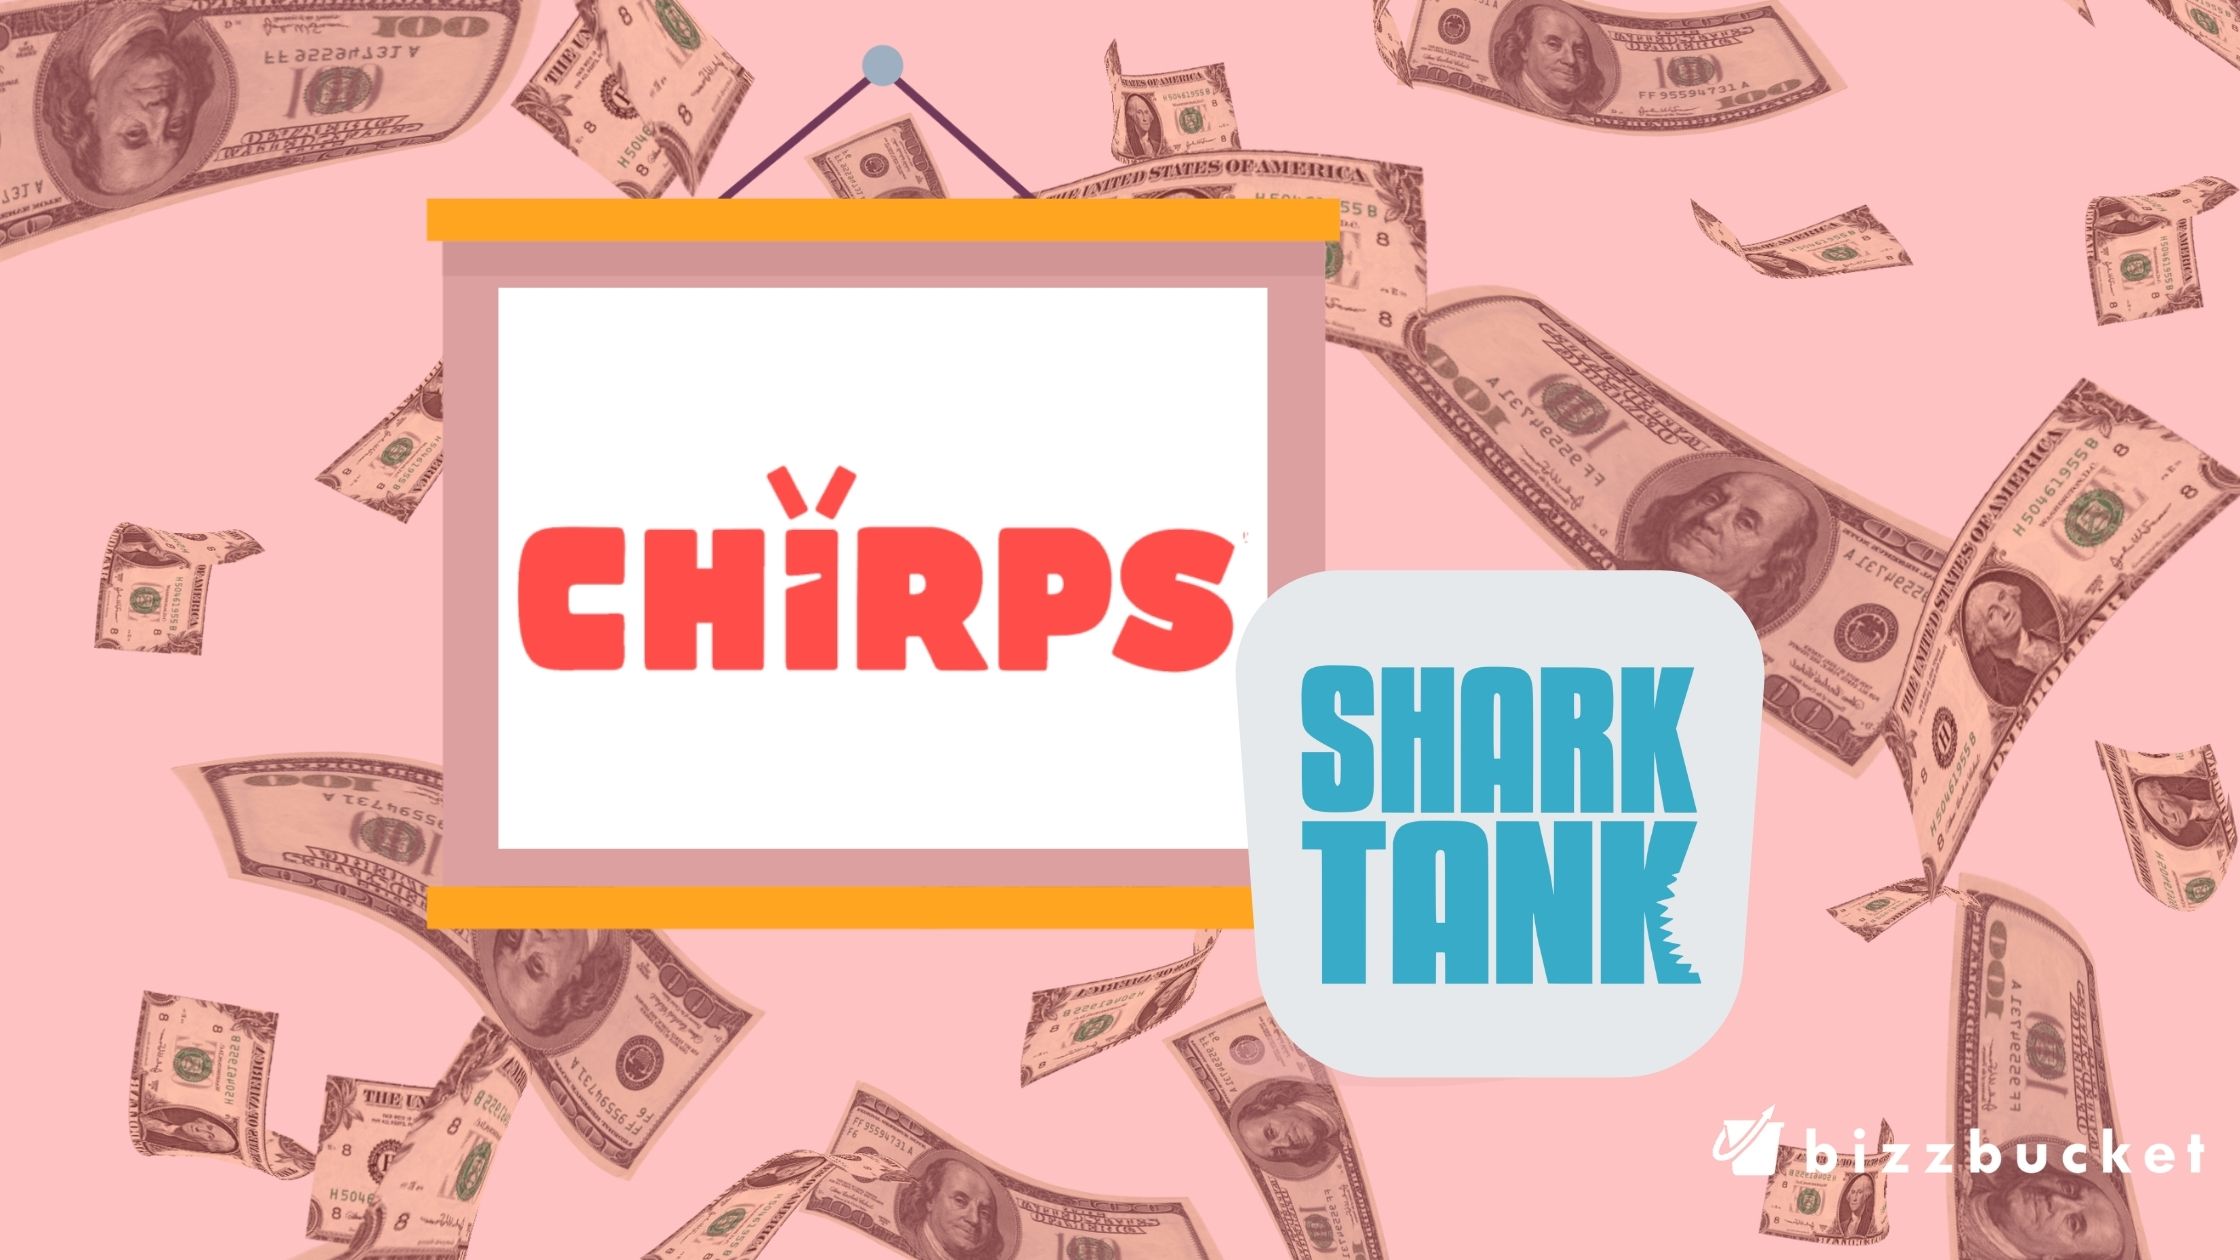 Chirps chips logo